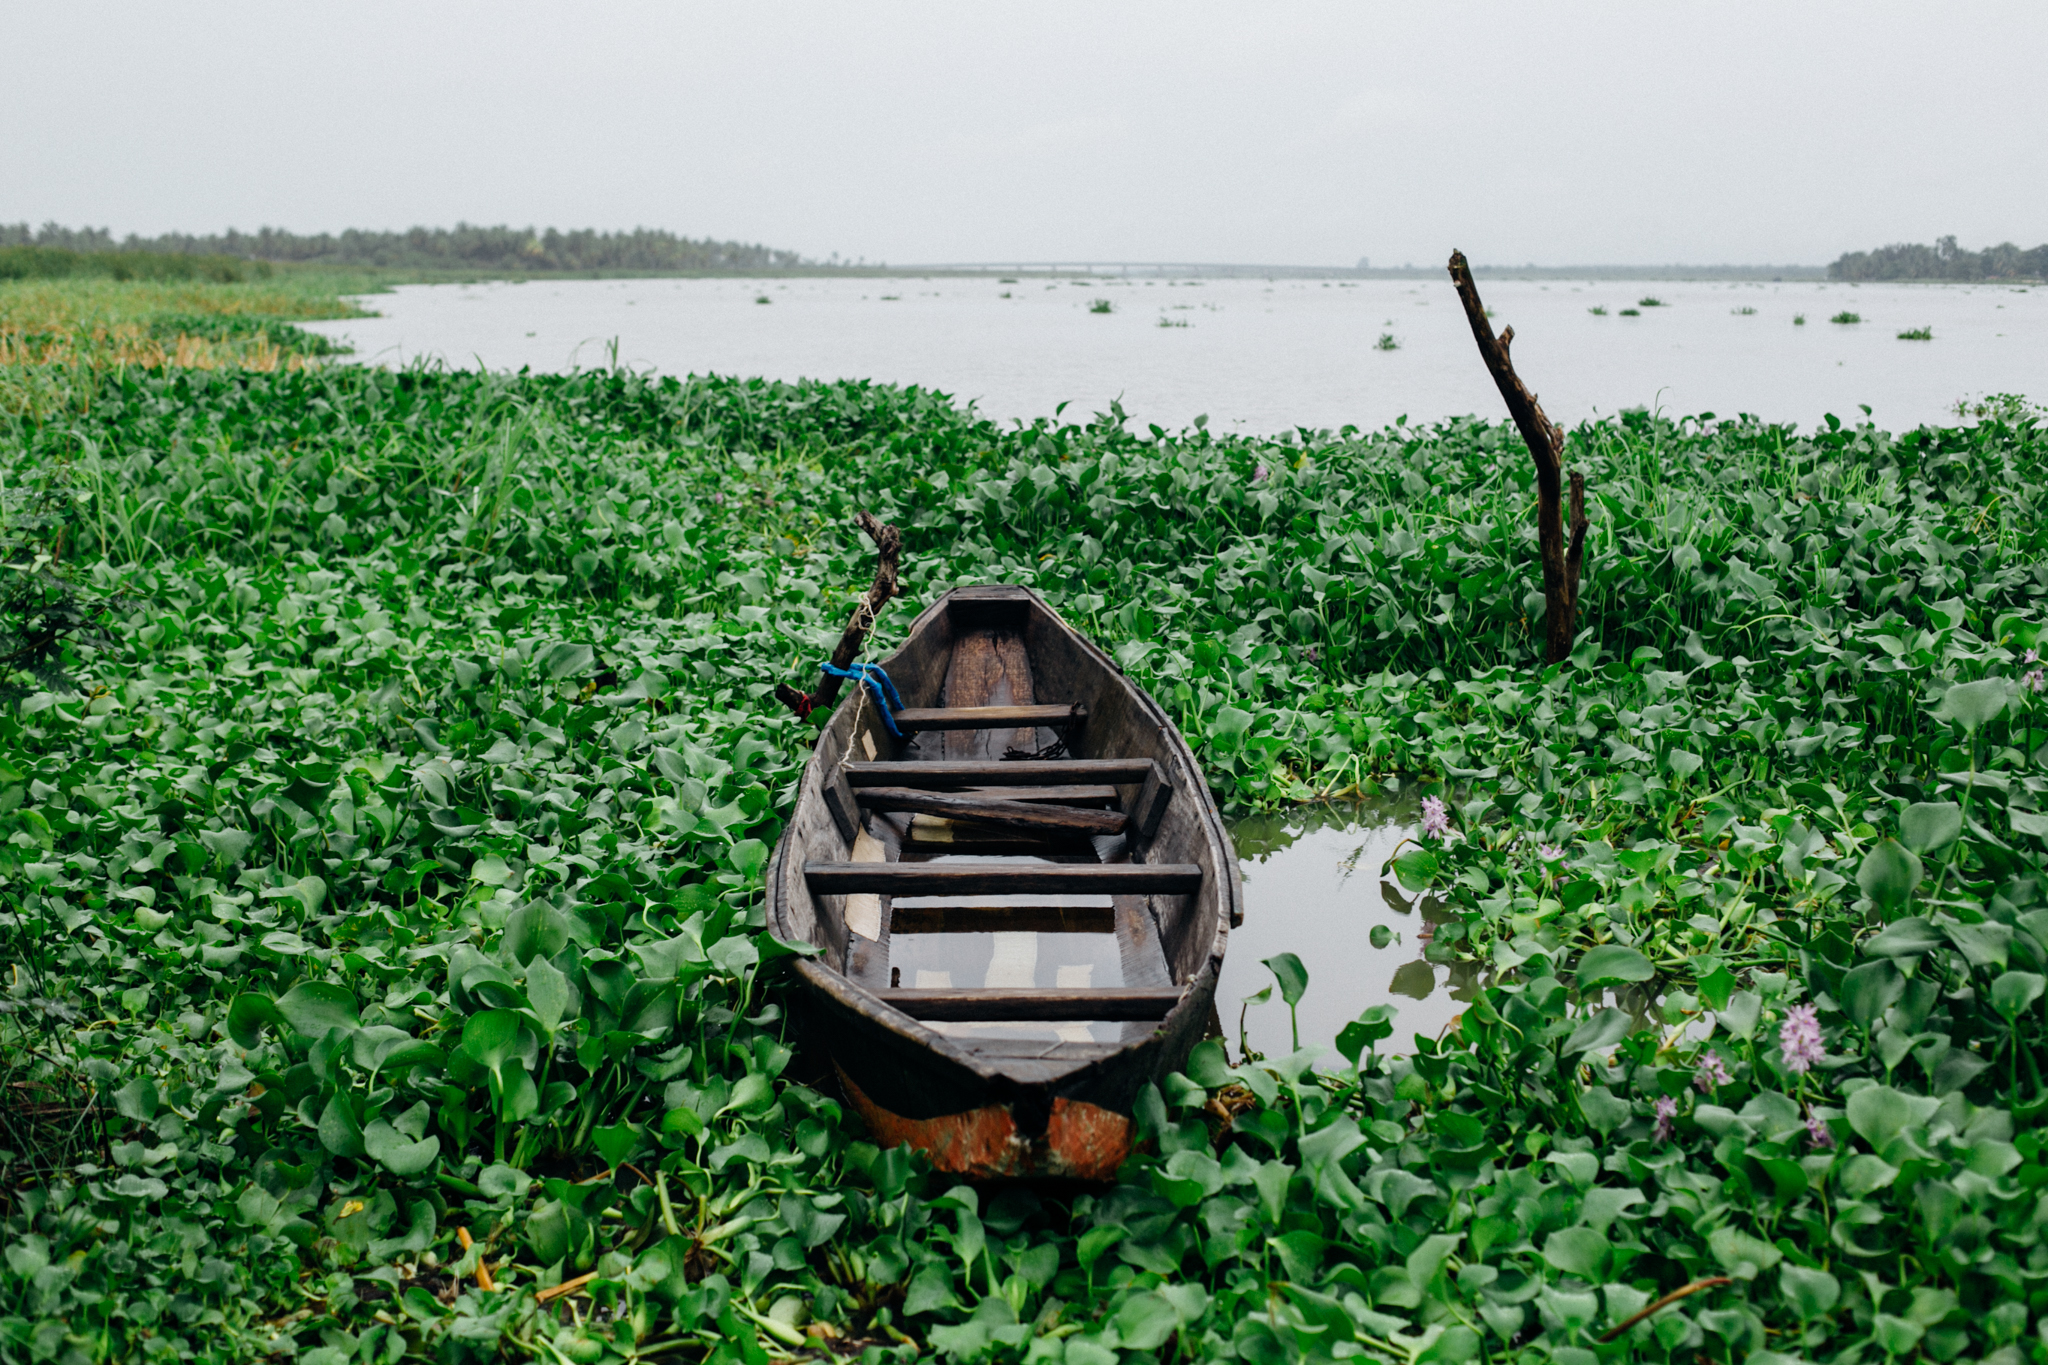 Canoe surrounded by water hyacinth, Badagry